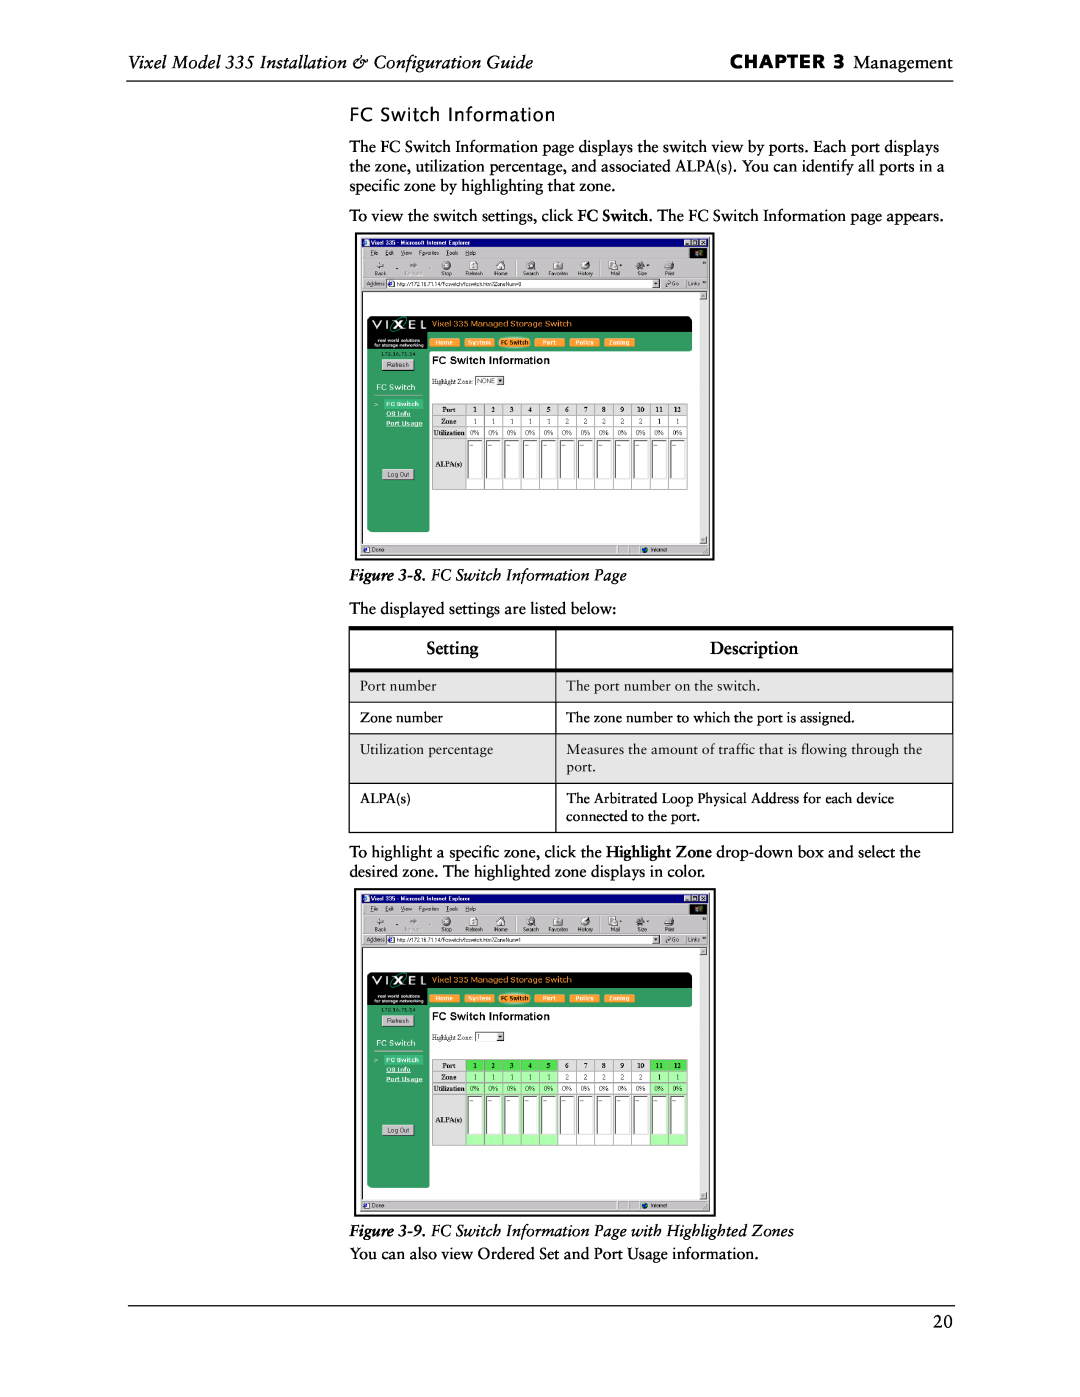 Vixel manual Management, FC Switch Information, Vixel Model 335 Installation & Configuration Guide, Setting, Description 